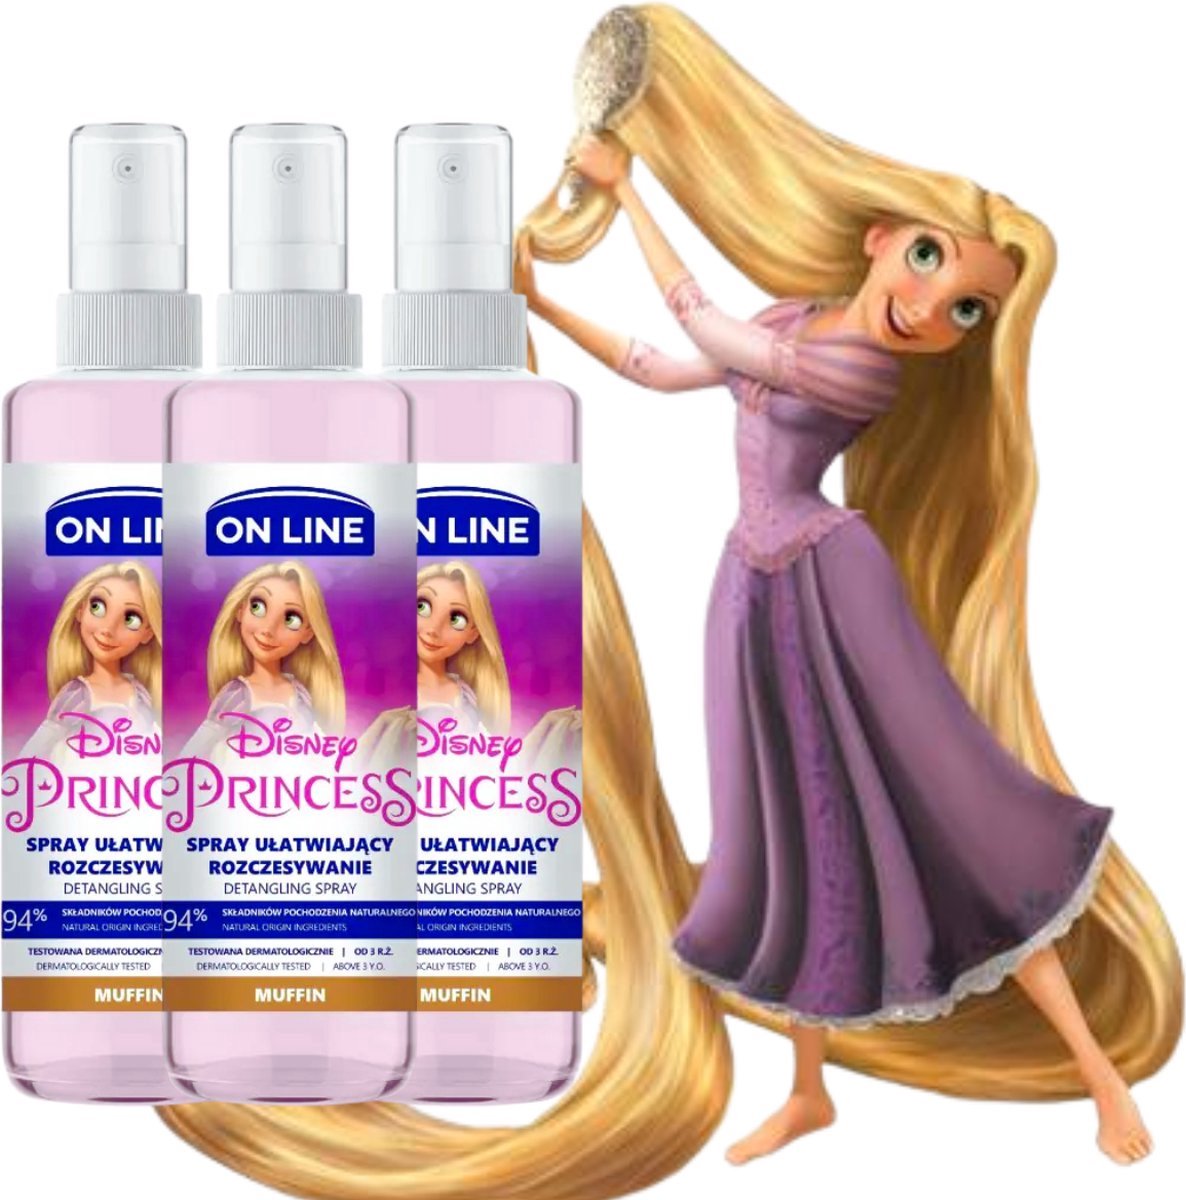 On Line Disney Princess Rapunzel Anti Klit Spray Muffin - Anti Klit Spray Kinderen - Muffin geur - Detangling Spray - 3 x 200 ml